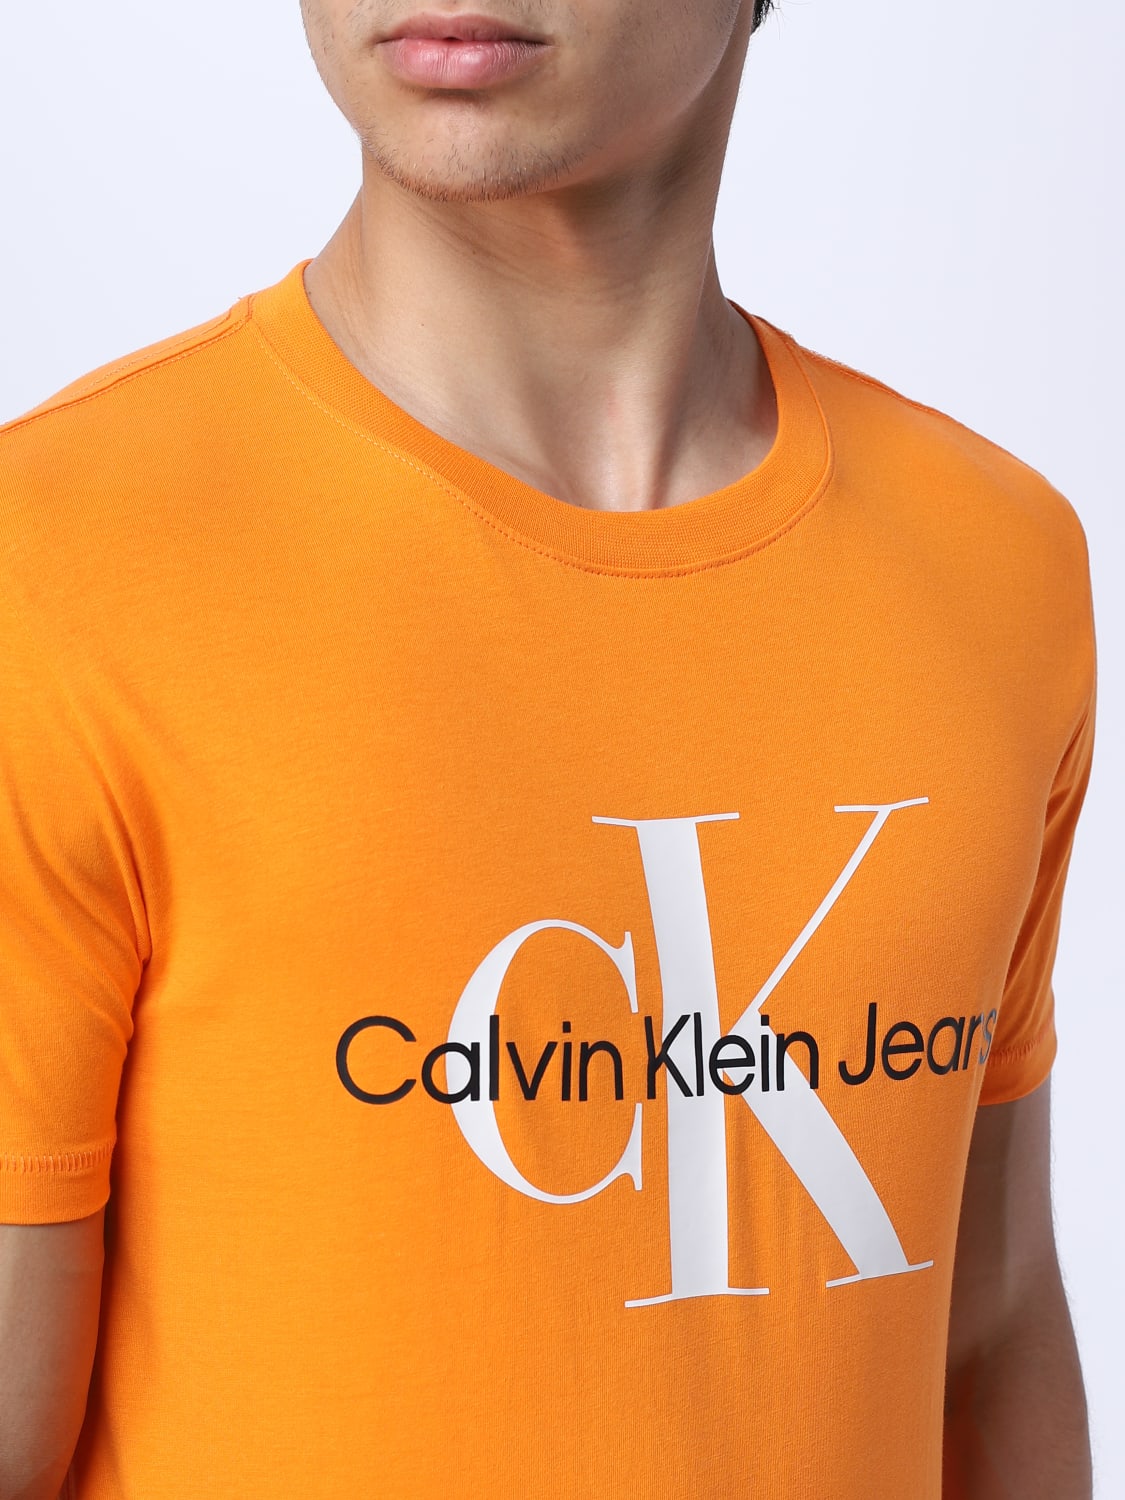 CALVIN KLEIN JEANS: t-shirt for man - Orange | Calvin Klein Jeans t-shirt  J30J320806 online at